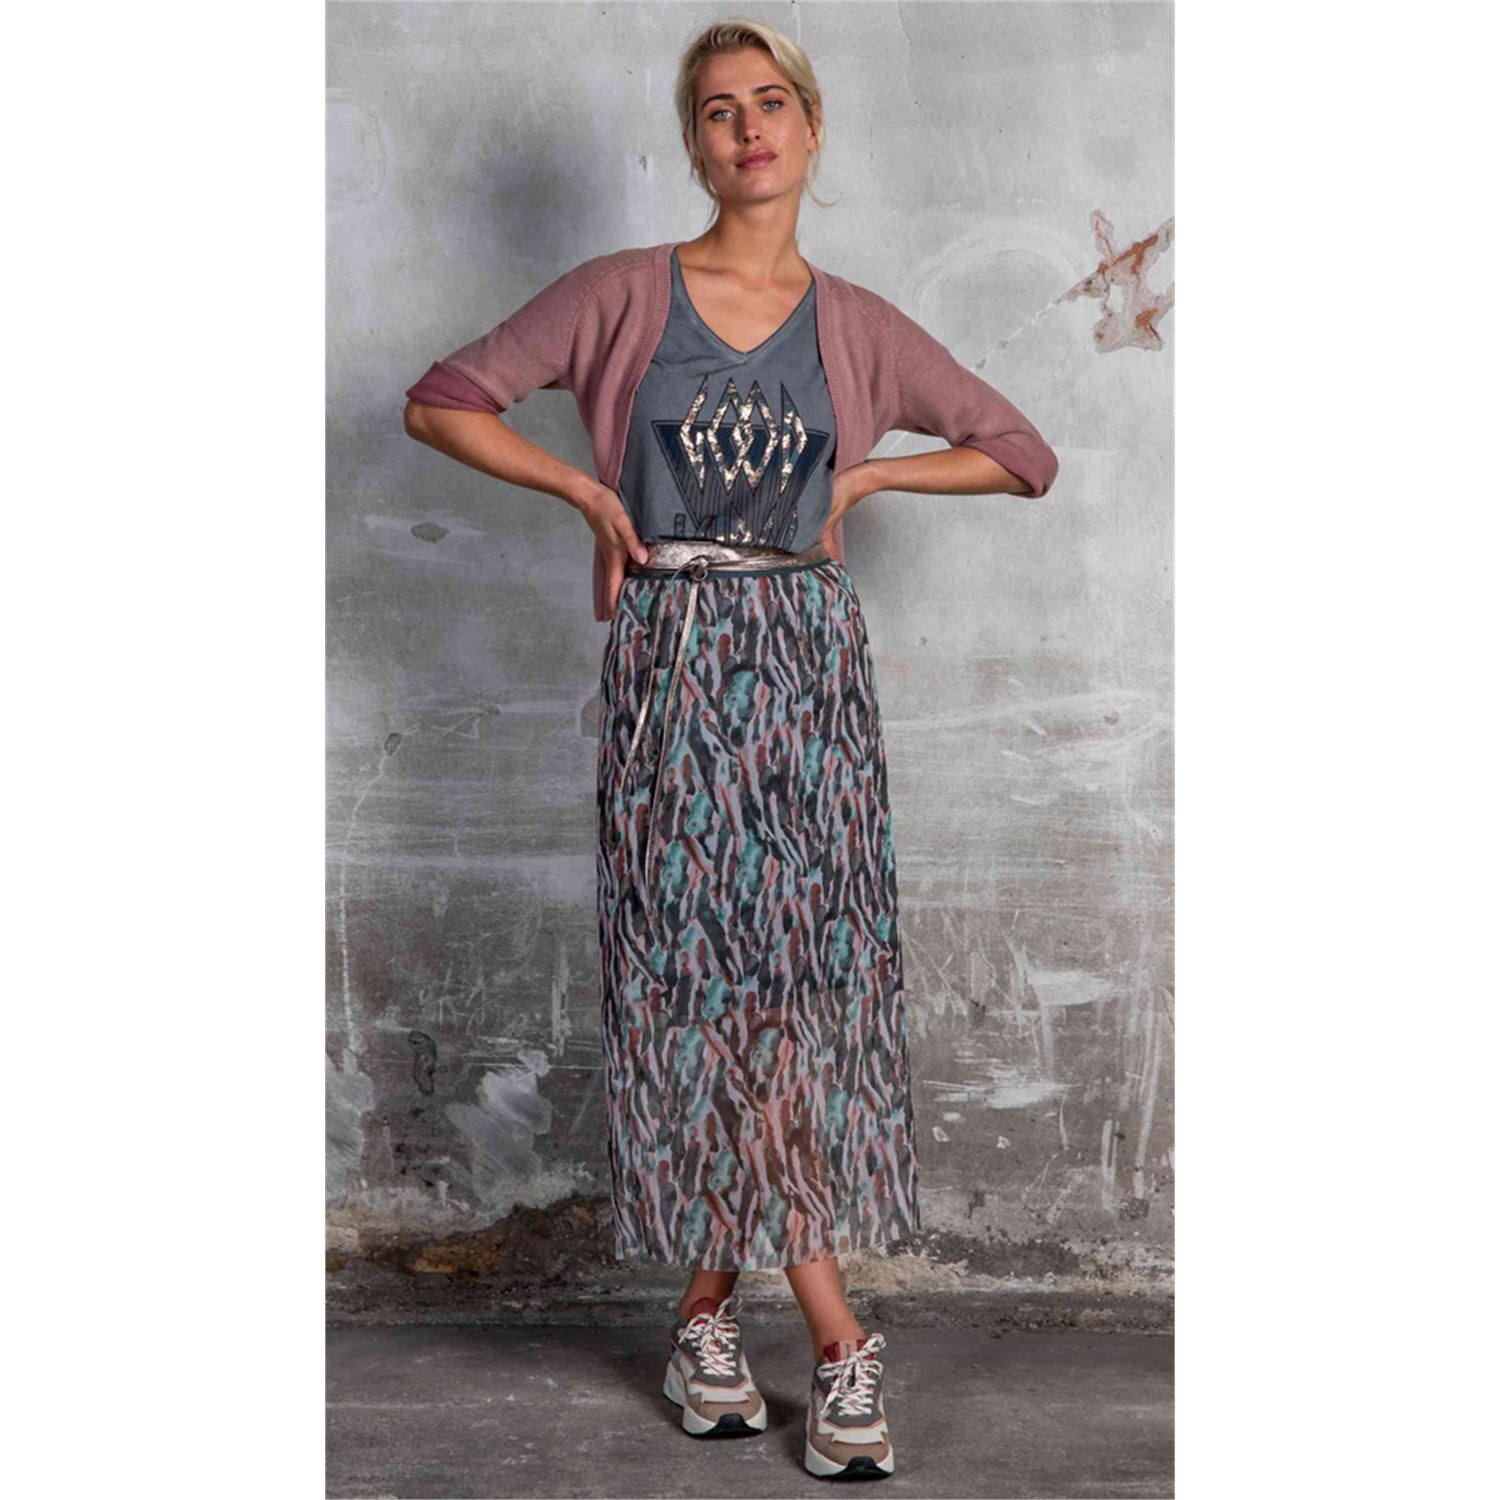 racket Beweegt niet Ritmisch Poools Rok mesh - Shop Poools dameskleding online